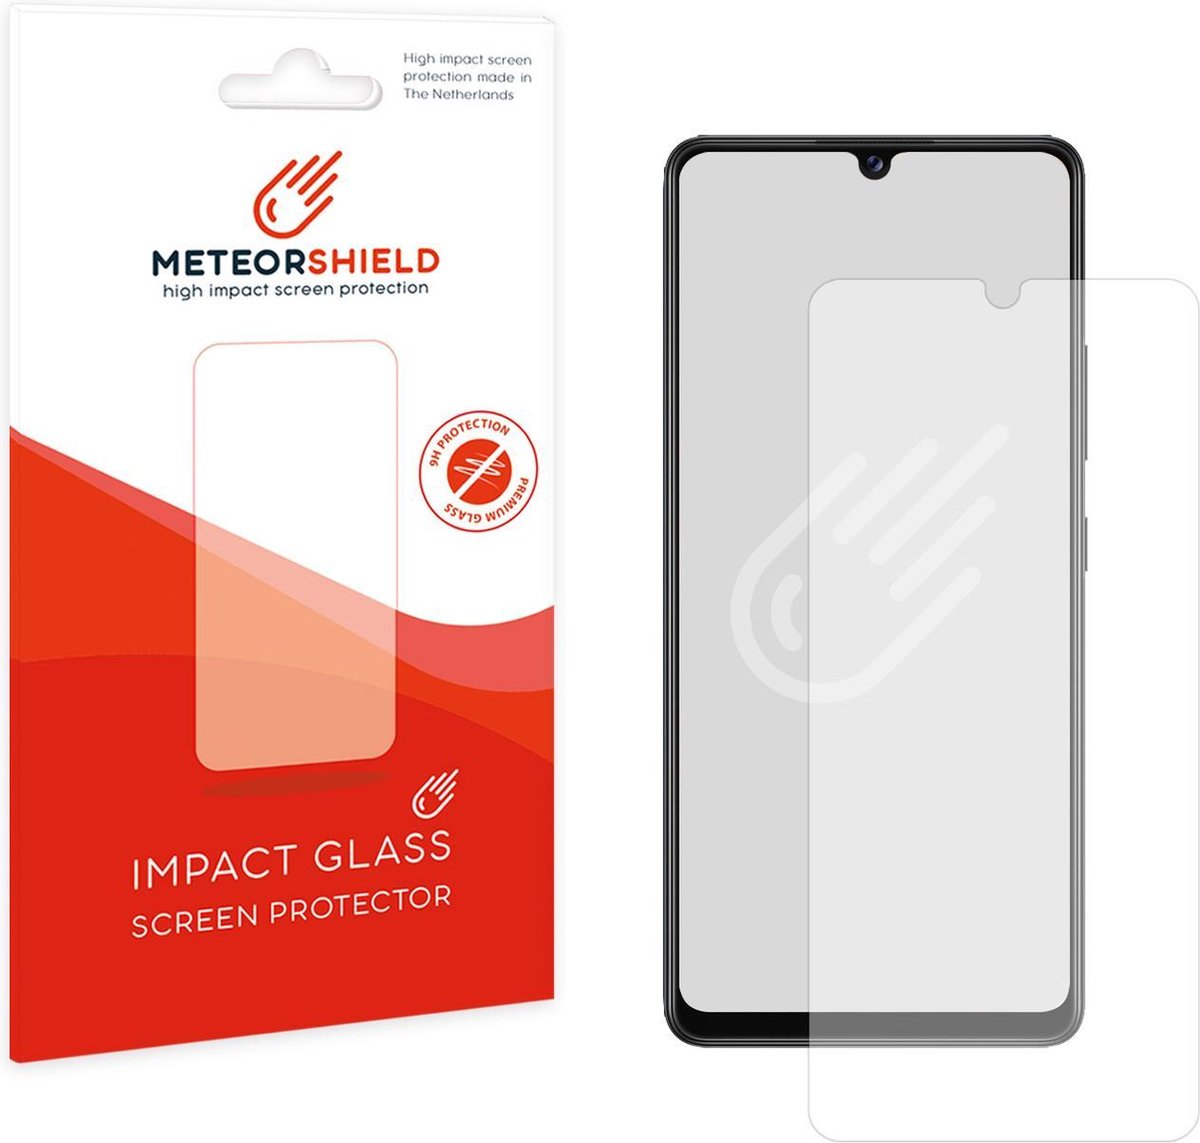 Meteorshield Samsung Galaxy A42 screenprotector - Ultra clear impact glass